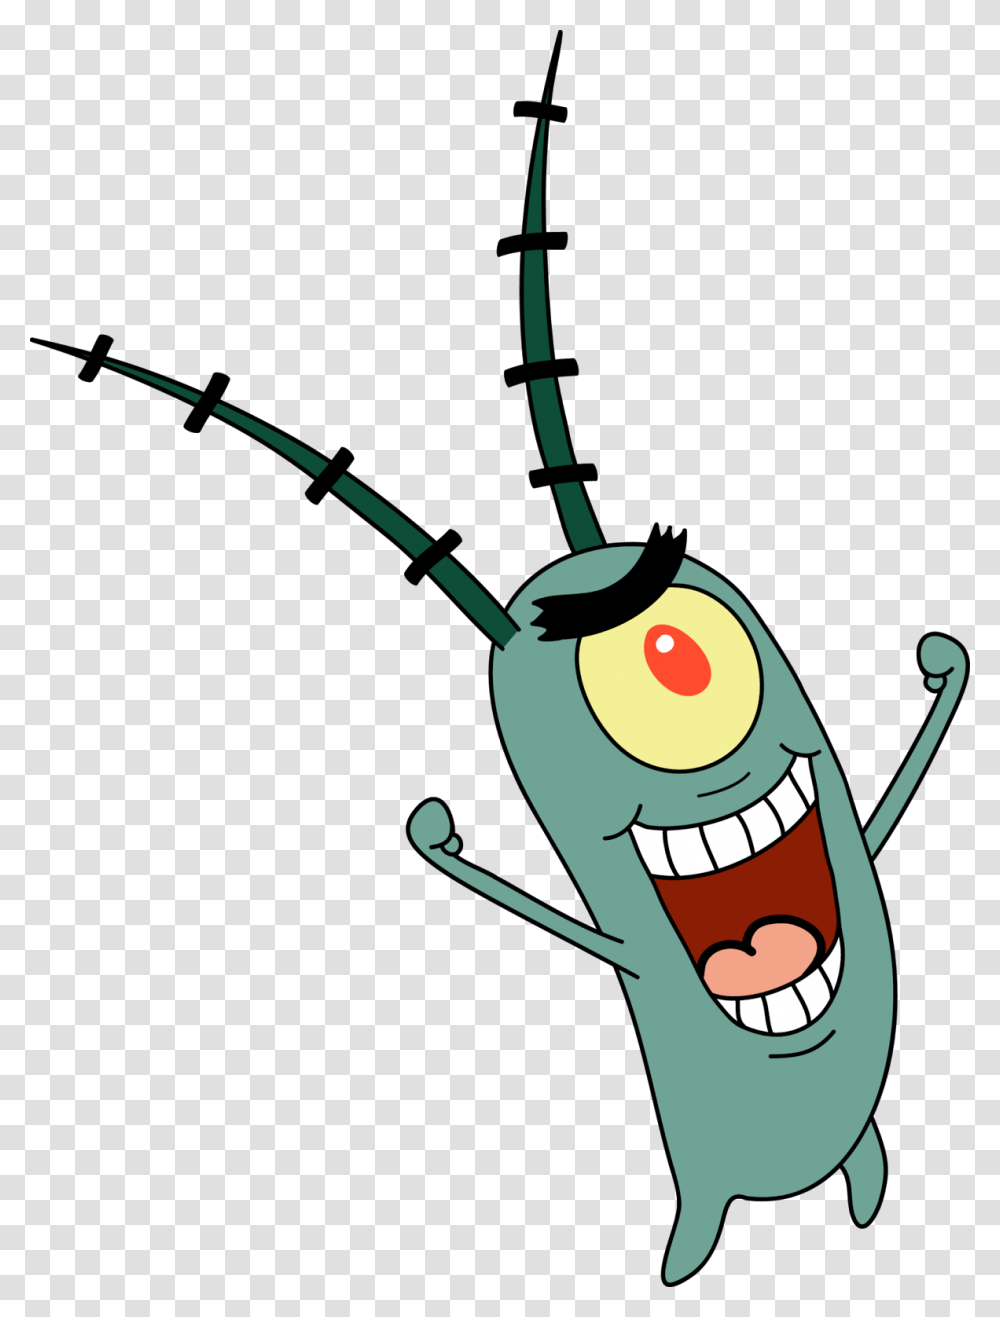 Cartoon Characters Spongebob Squarepants, Insect, Invertebrate, Animal, Cricket Insect Transparent Png